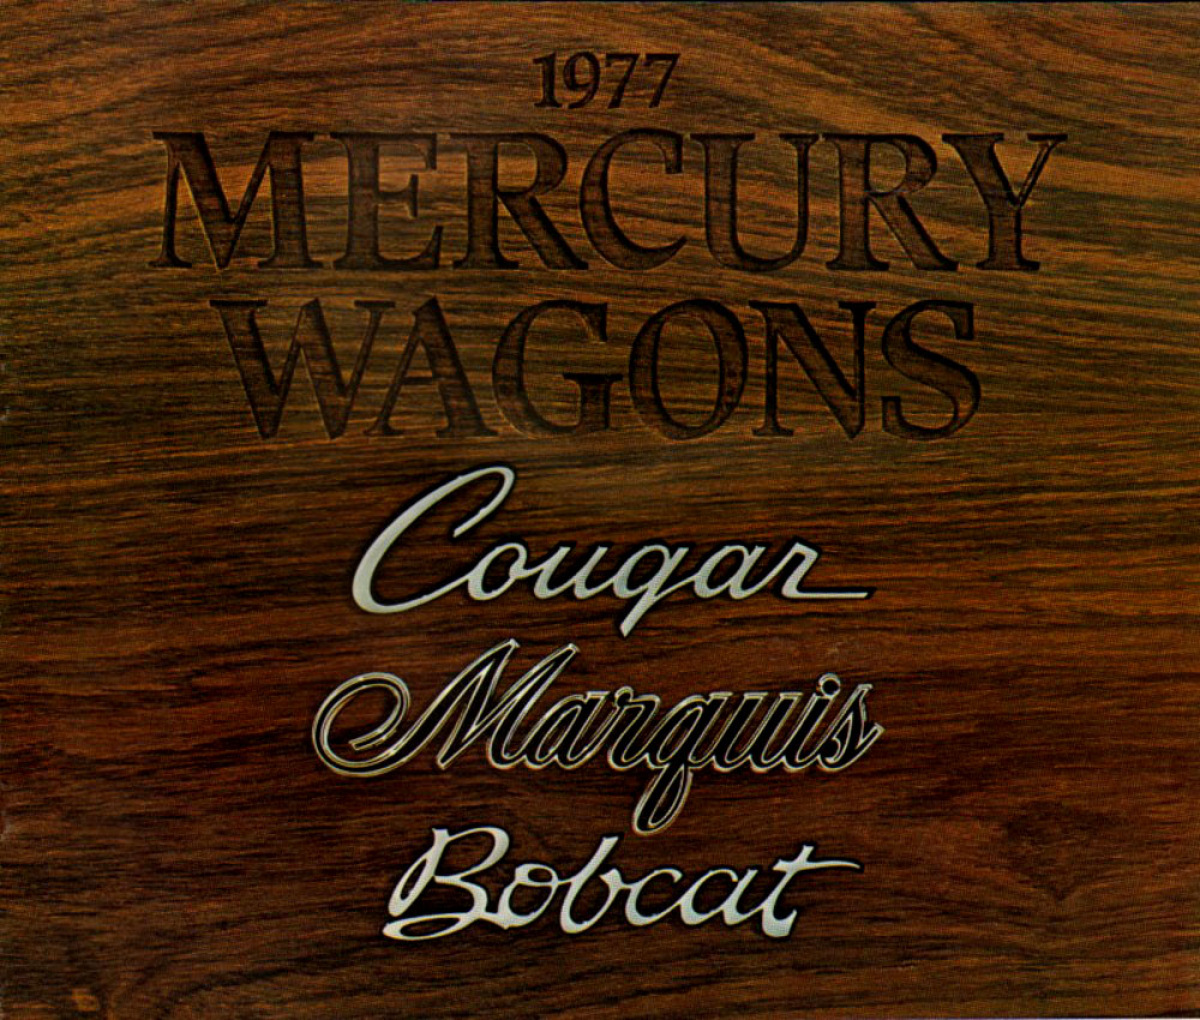 1977_Mercury_Wagons-01